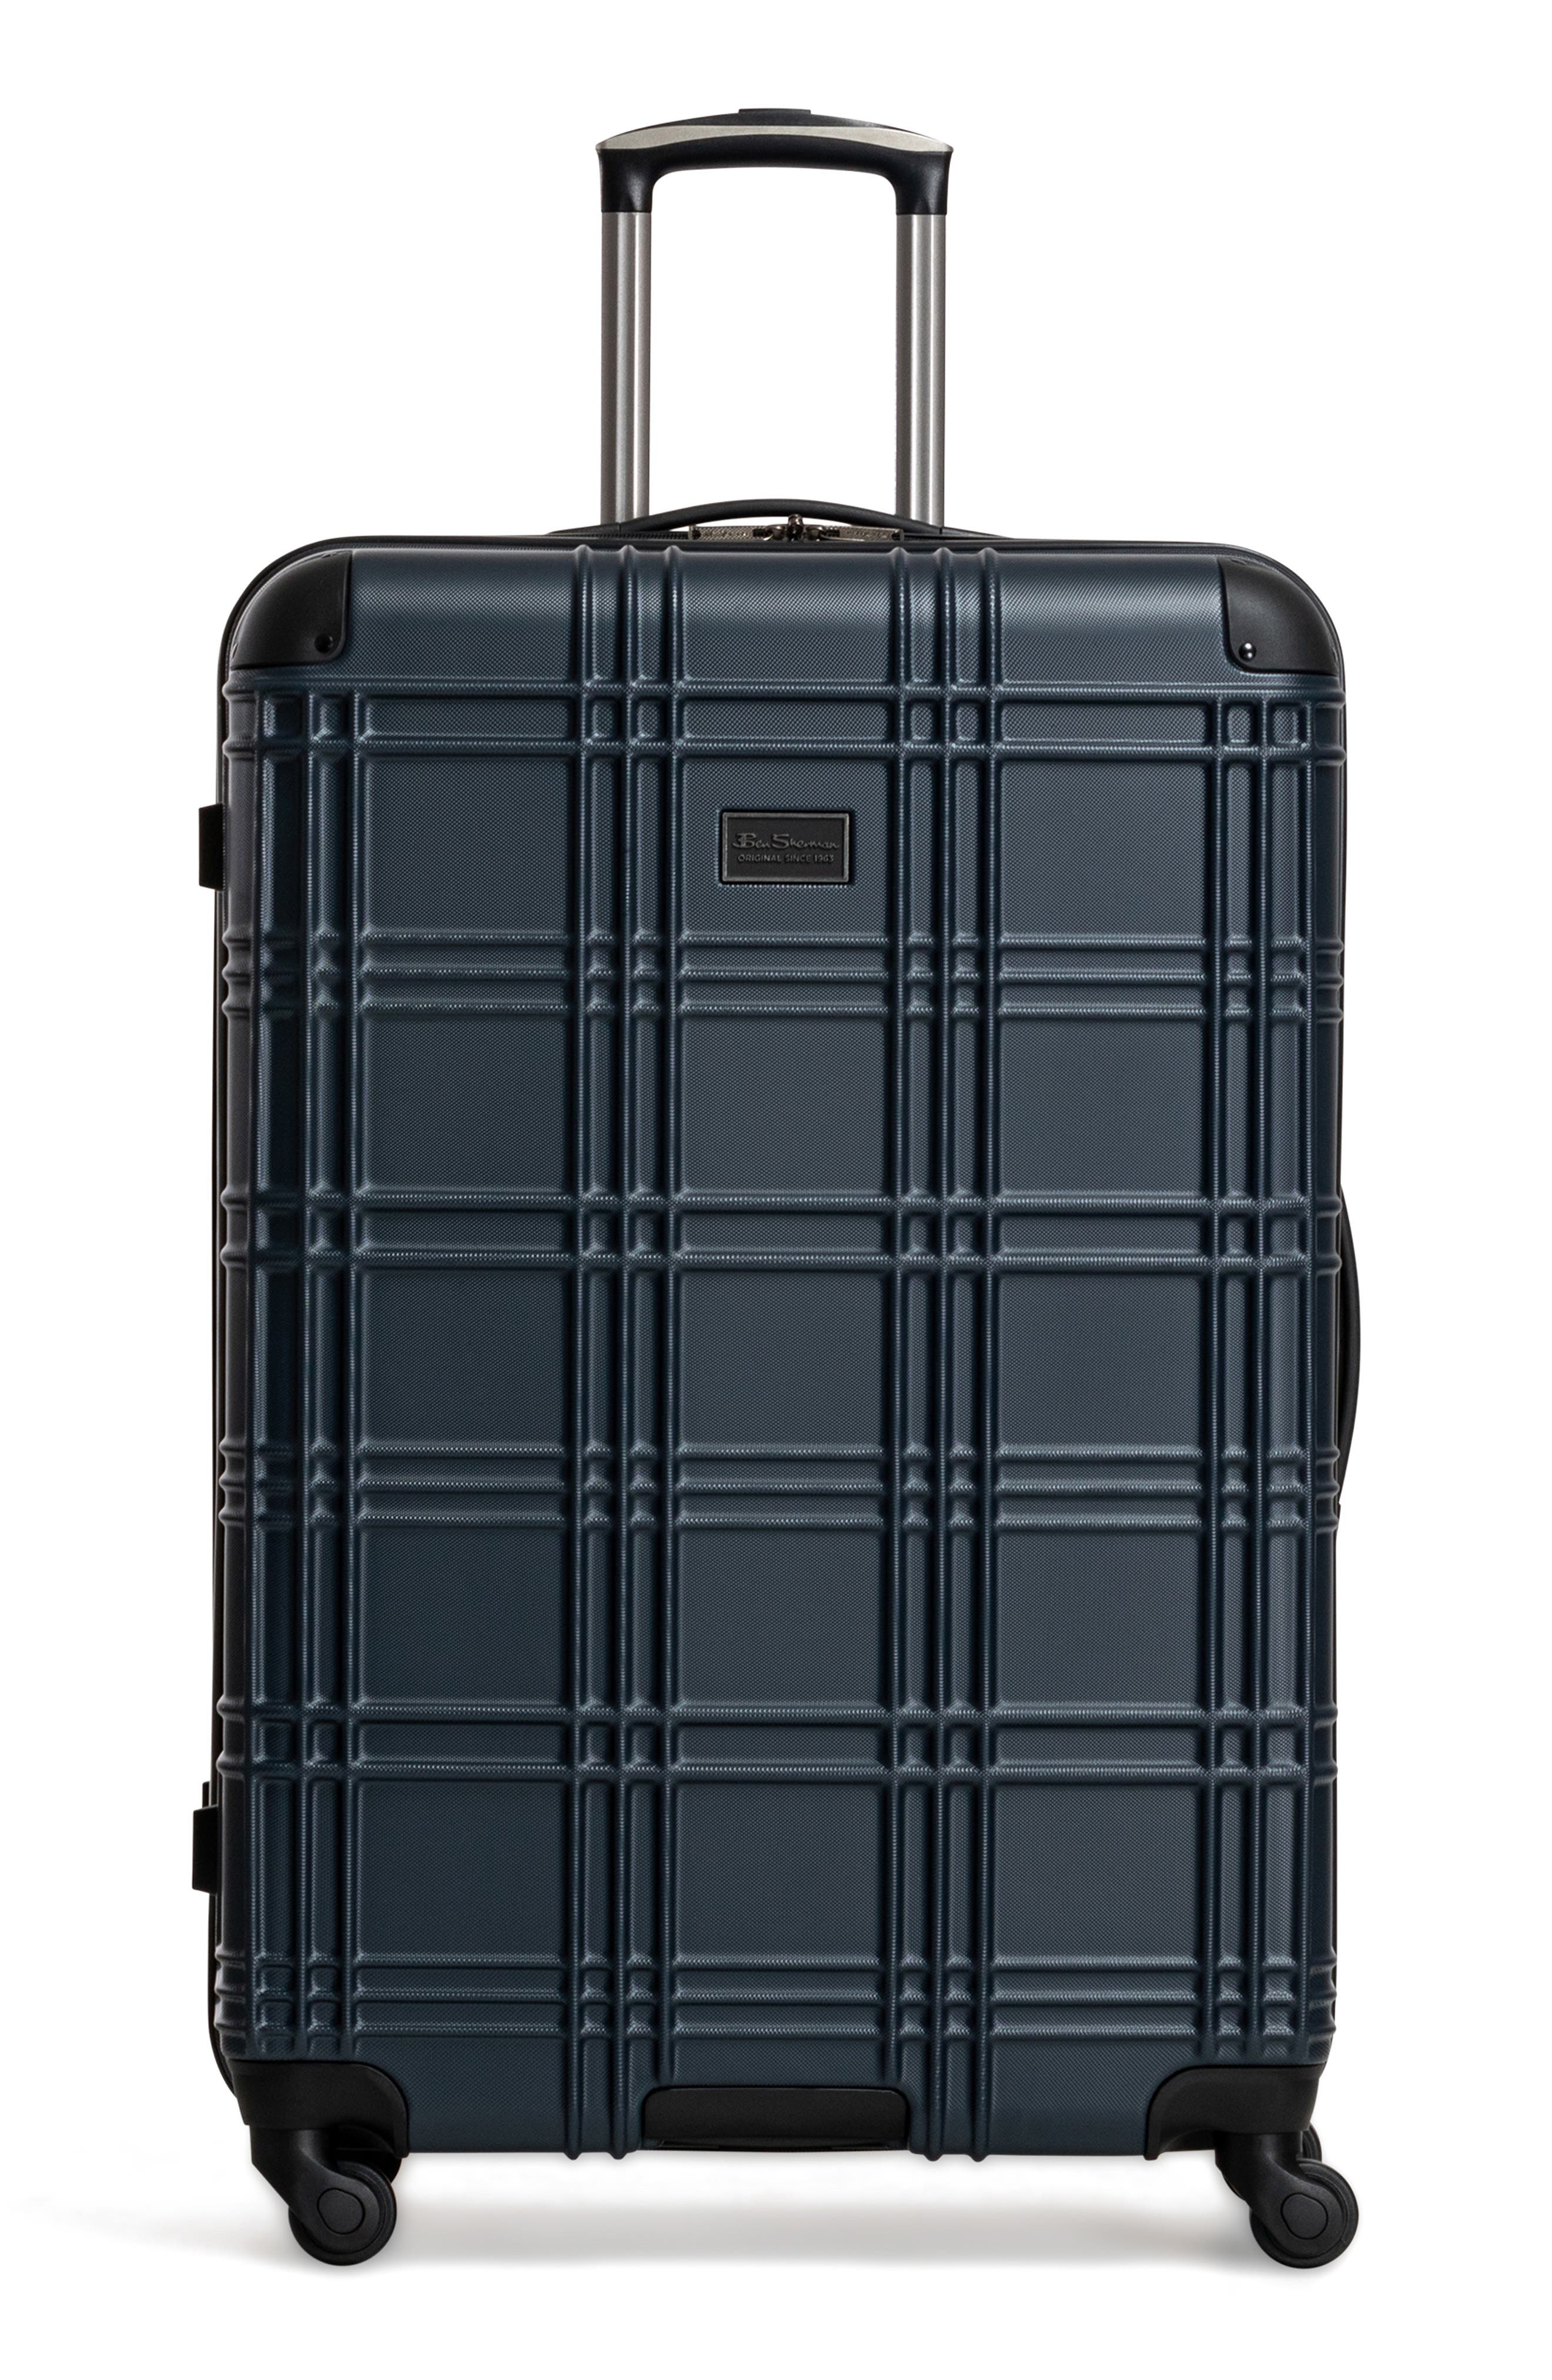 Ben Sherman Unisex-Adult Nottingham Lightweight Hardside 4-Wheel Spinner Travel Luggage Checked Luggage 